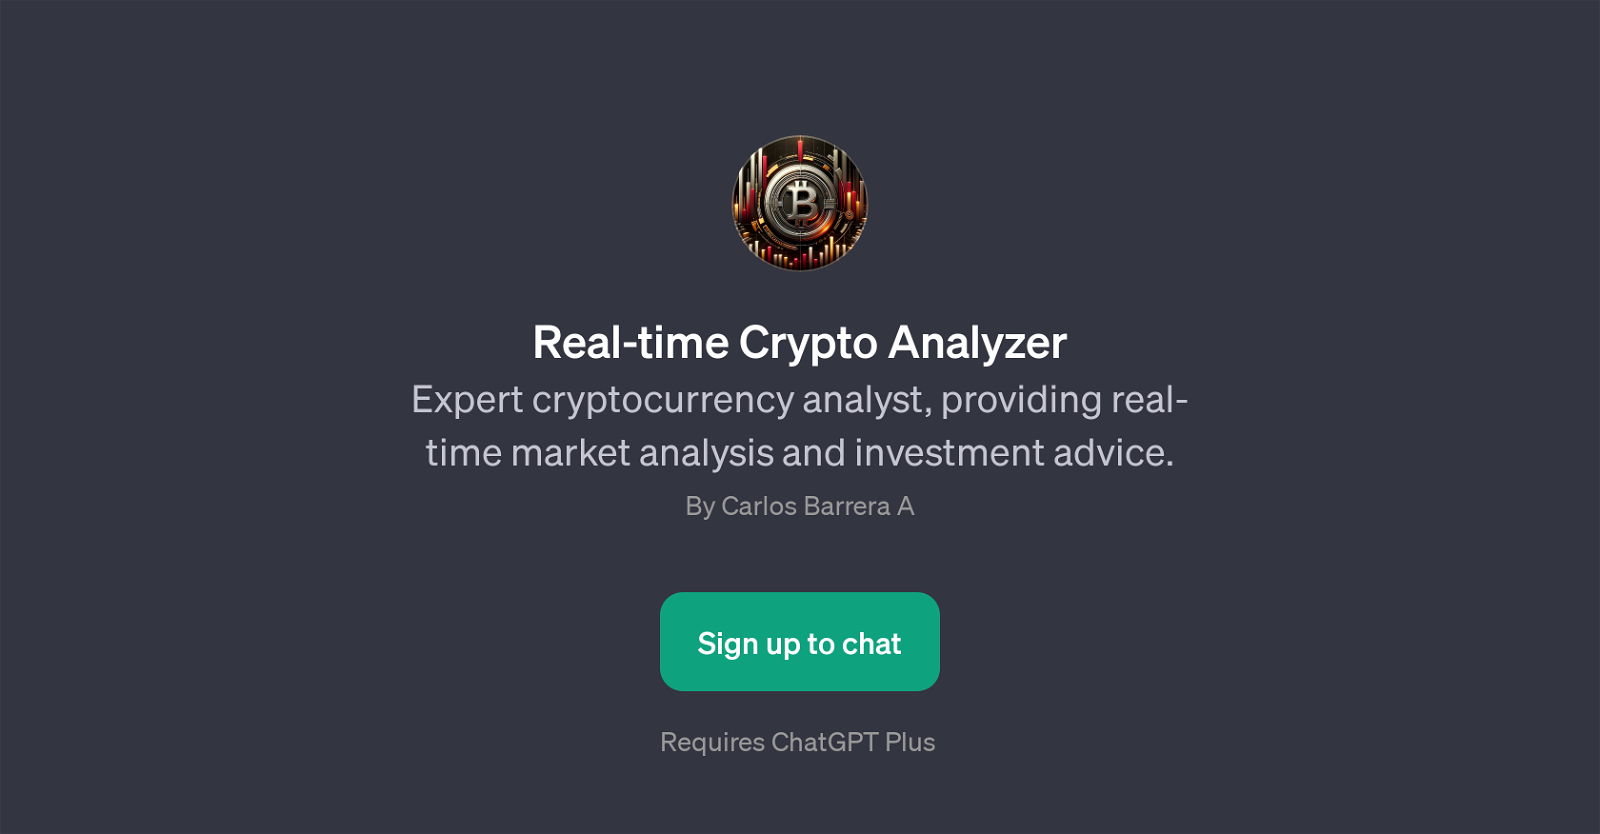 Real-time Crypto Analyzer website